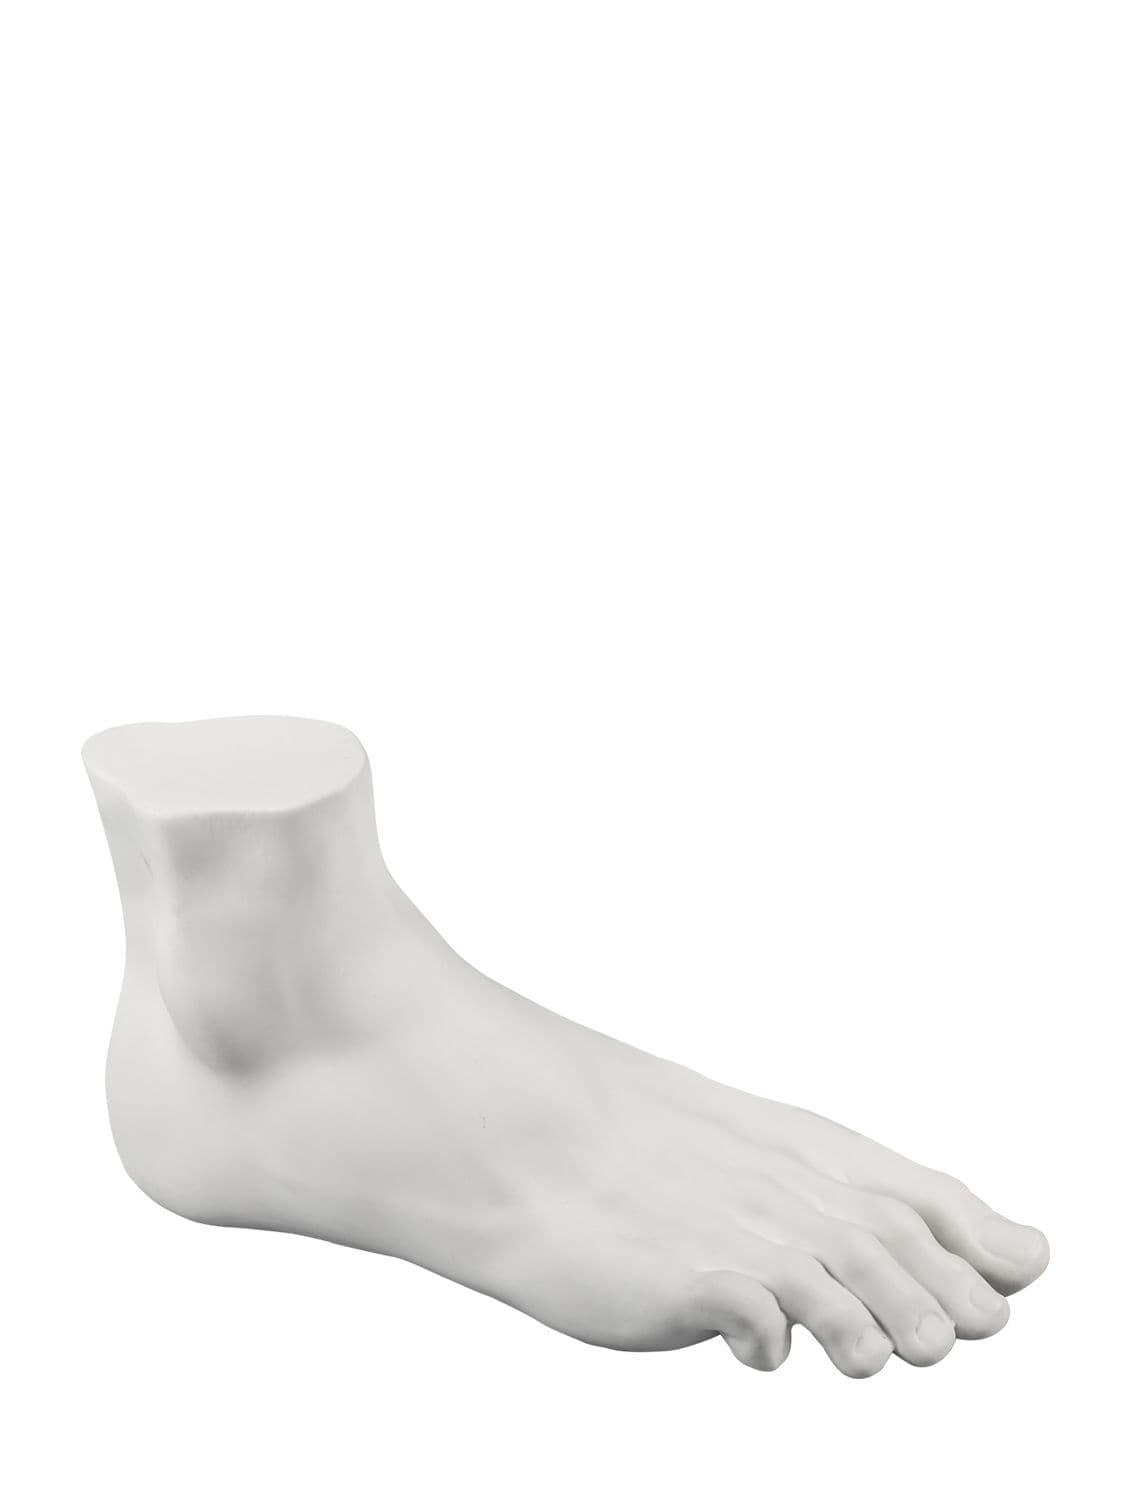 Image of Memorabilia Mvsevm Porcelain Male Foot